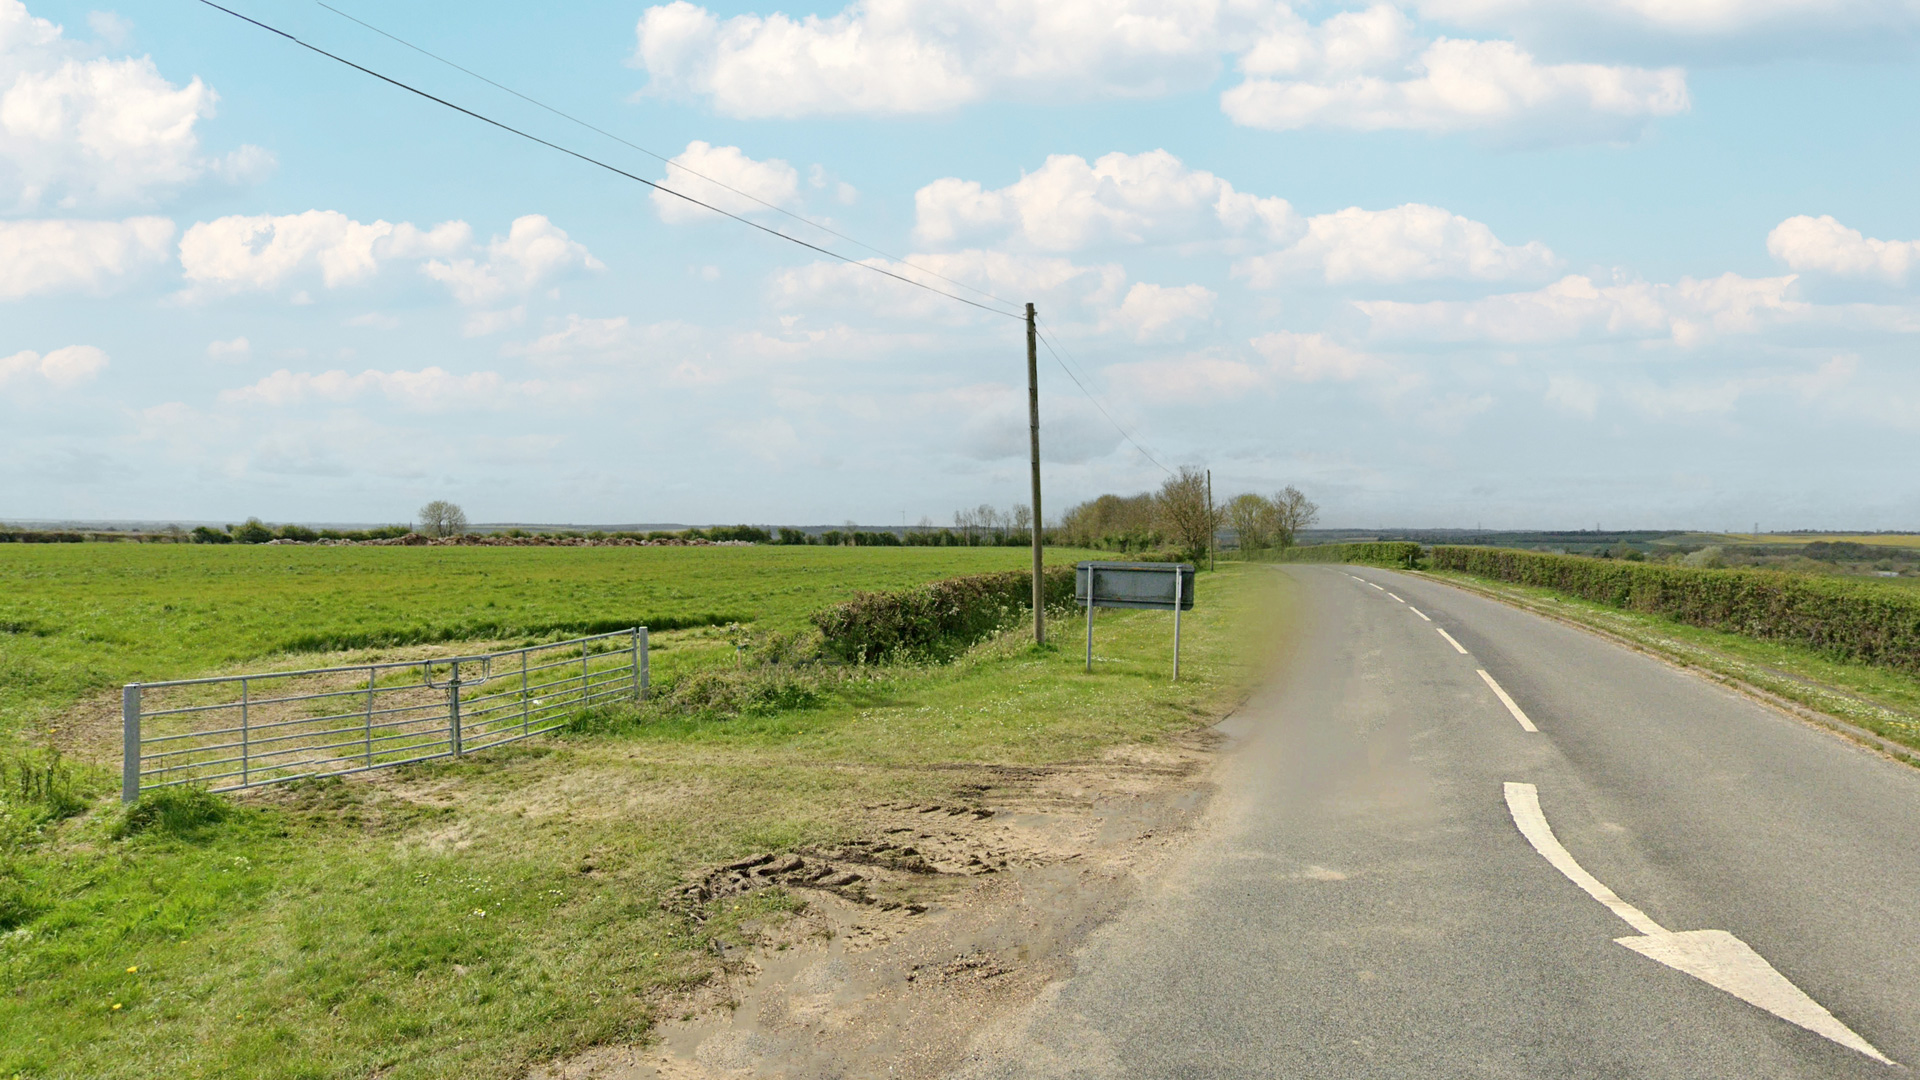 Land for sale in Alconbury Weston road frontage